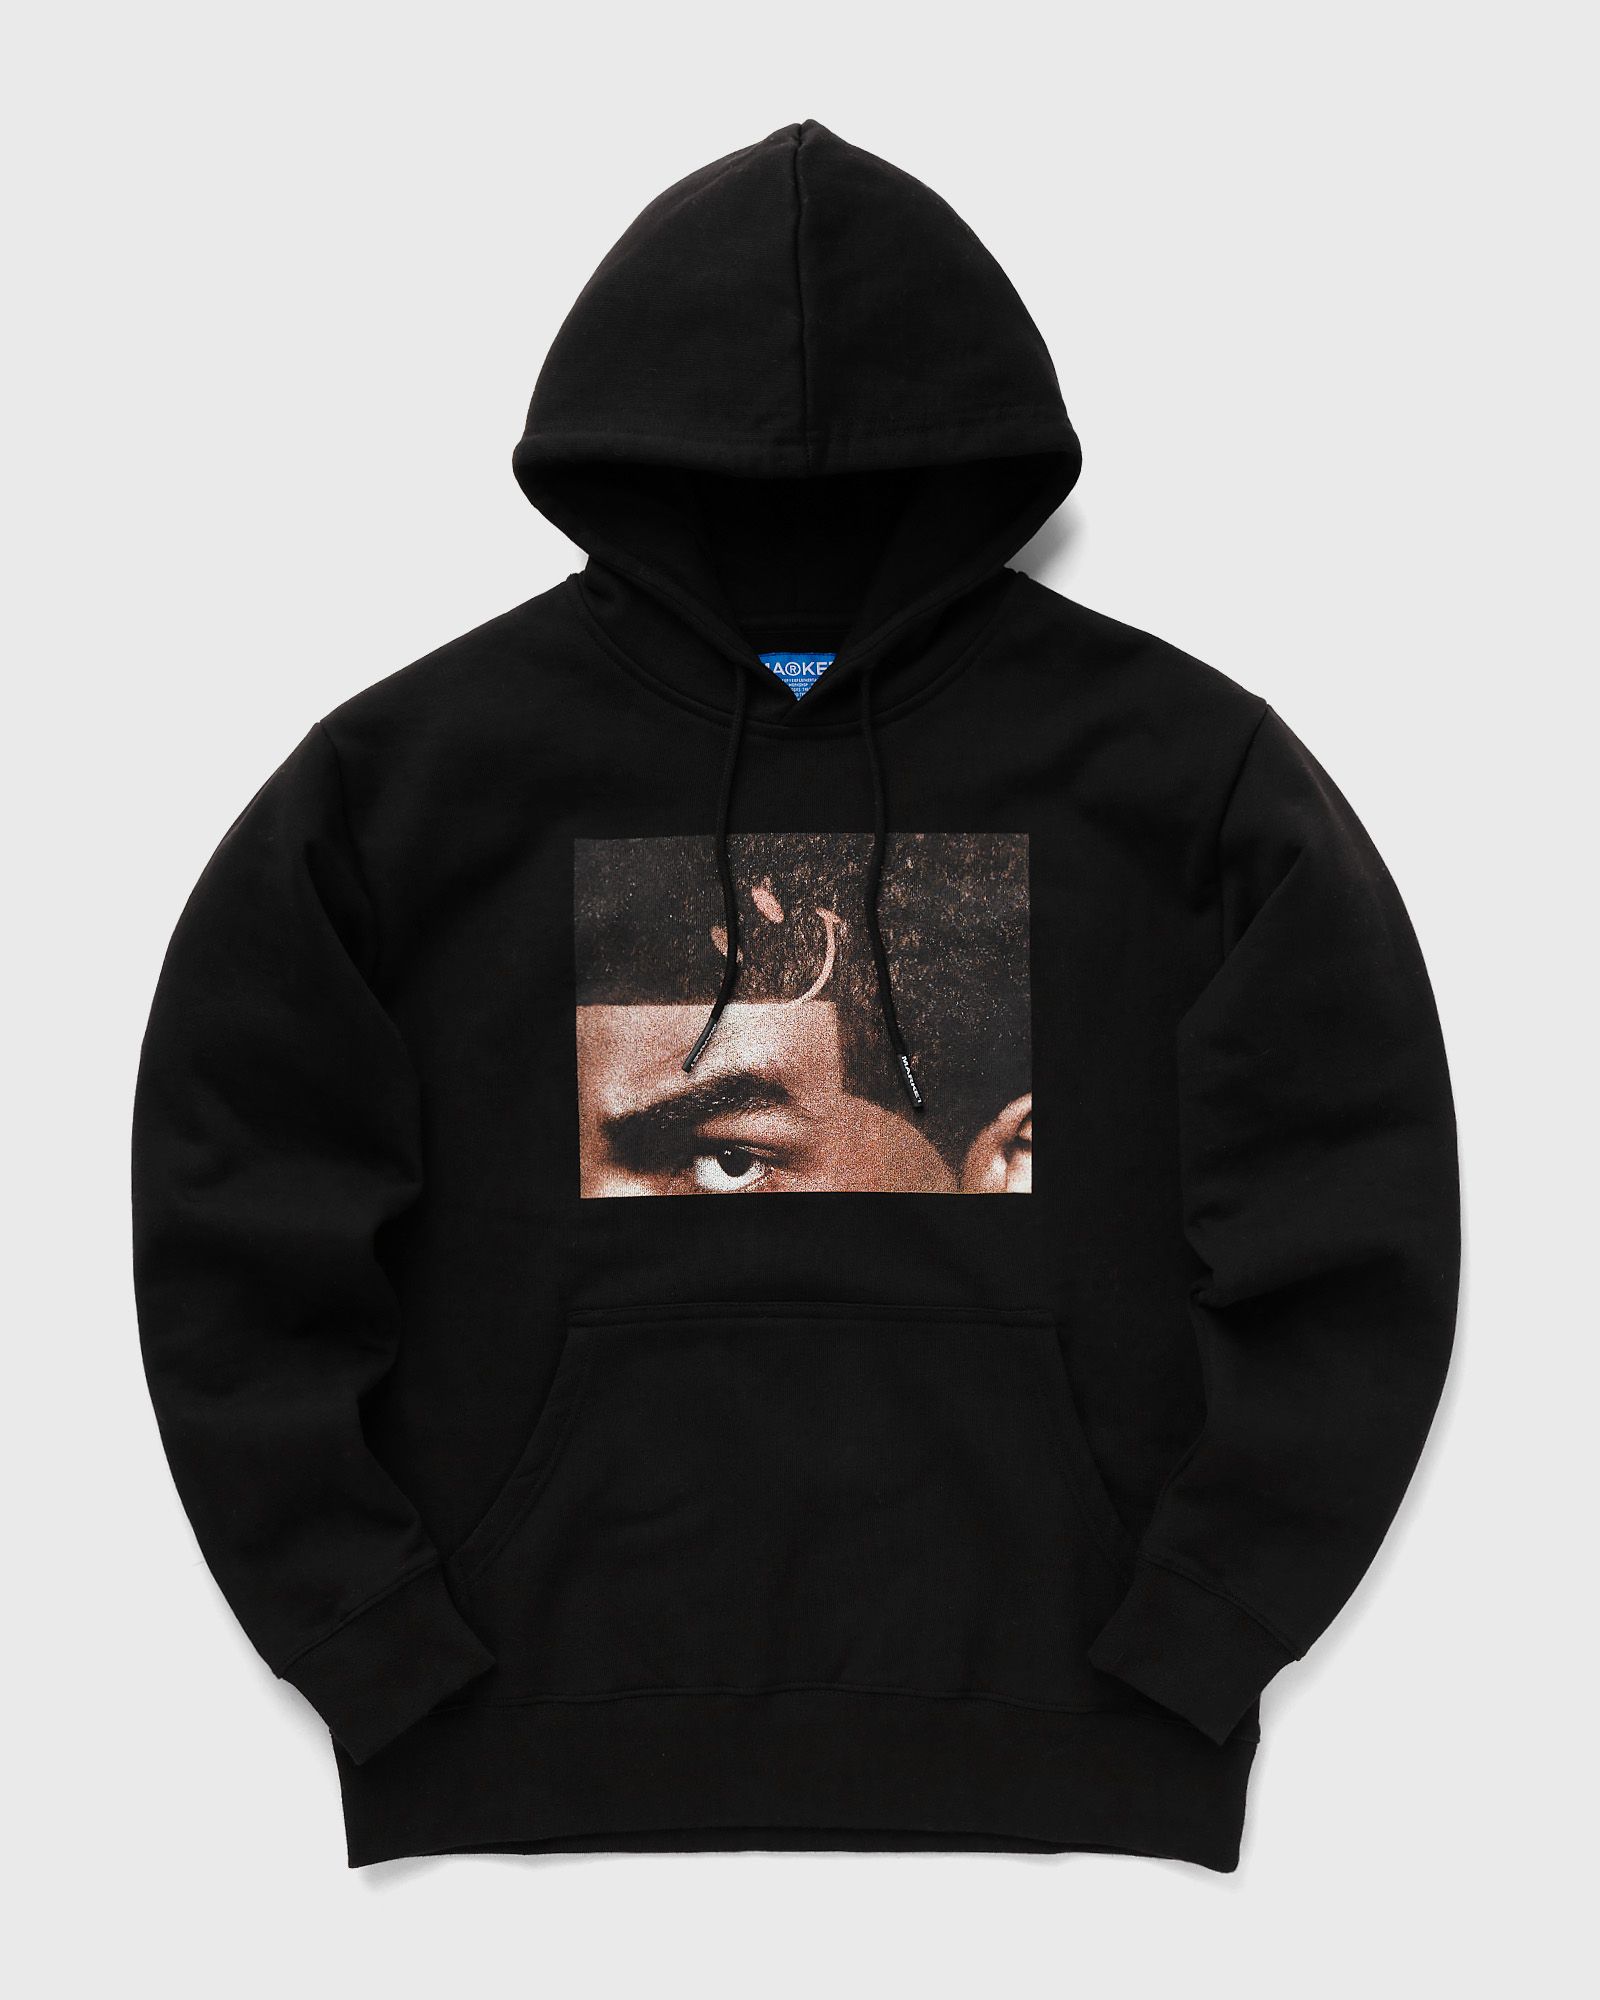 Market - smiley soft part hoodie men hoodies black in größe:xl